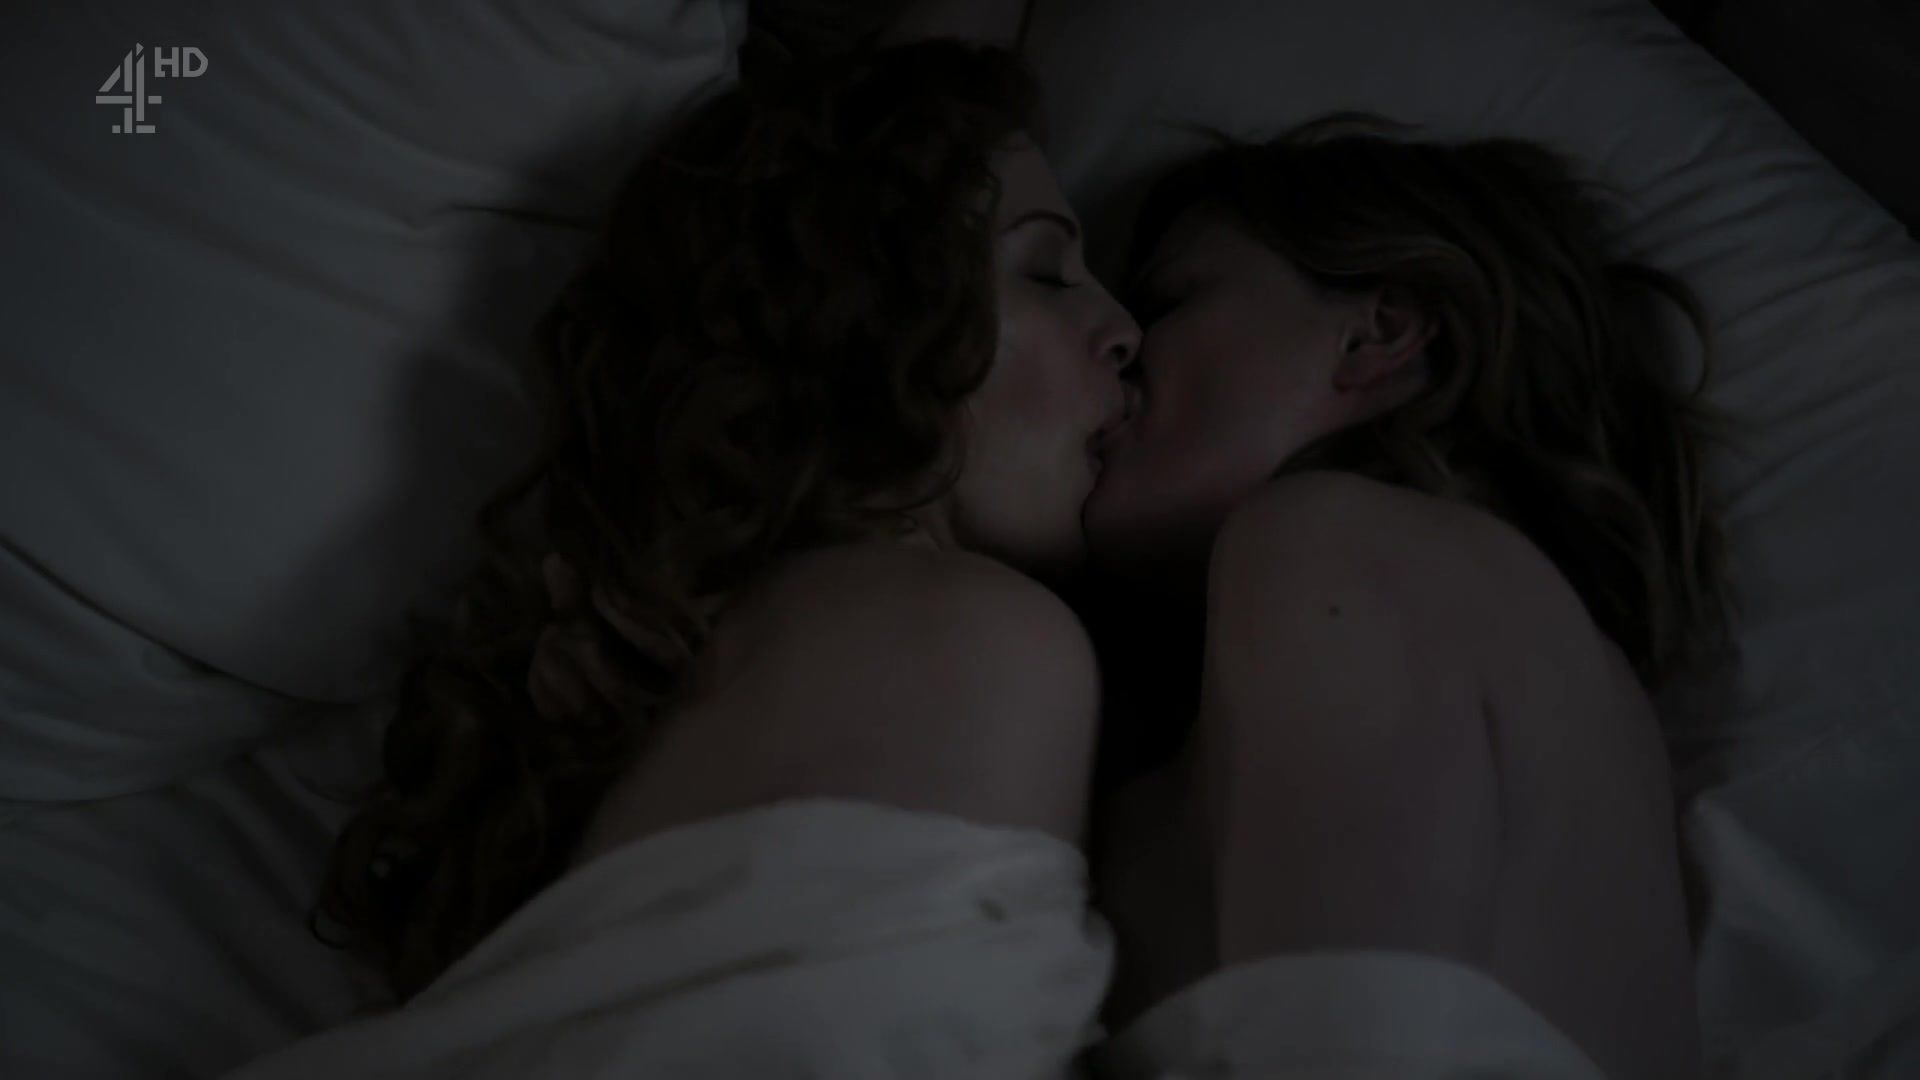 StreamSex Philip K Dicks Electric Dreams - Hot Lesbian Scene Stunning - 2